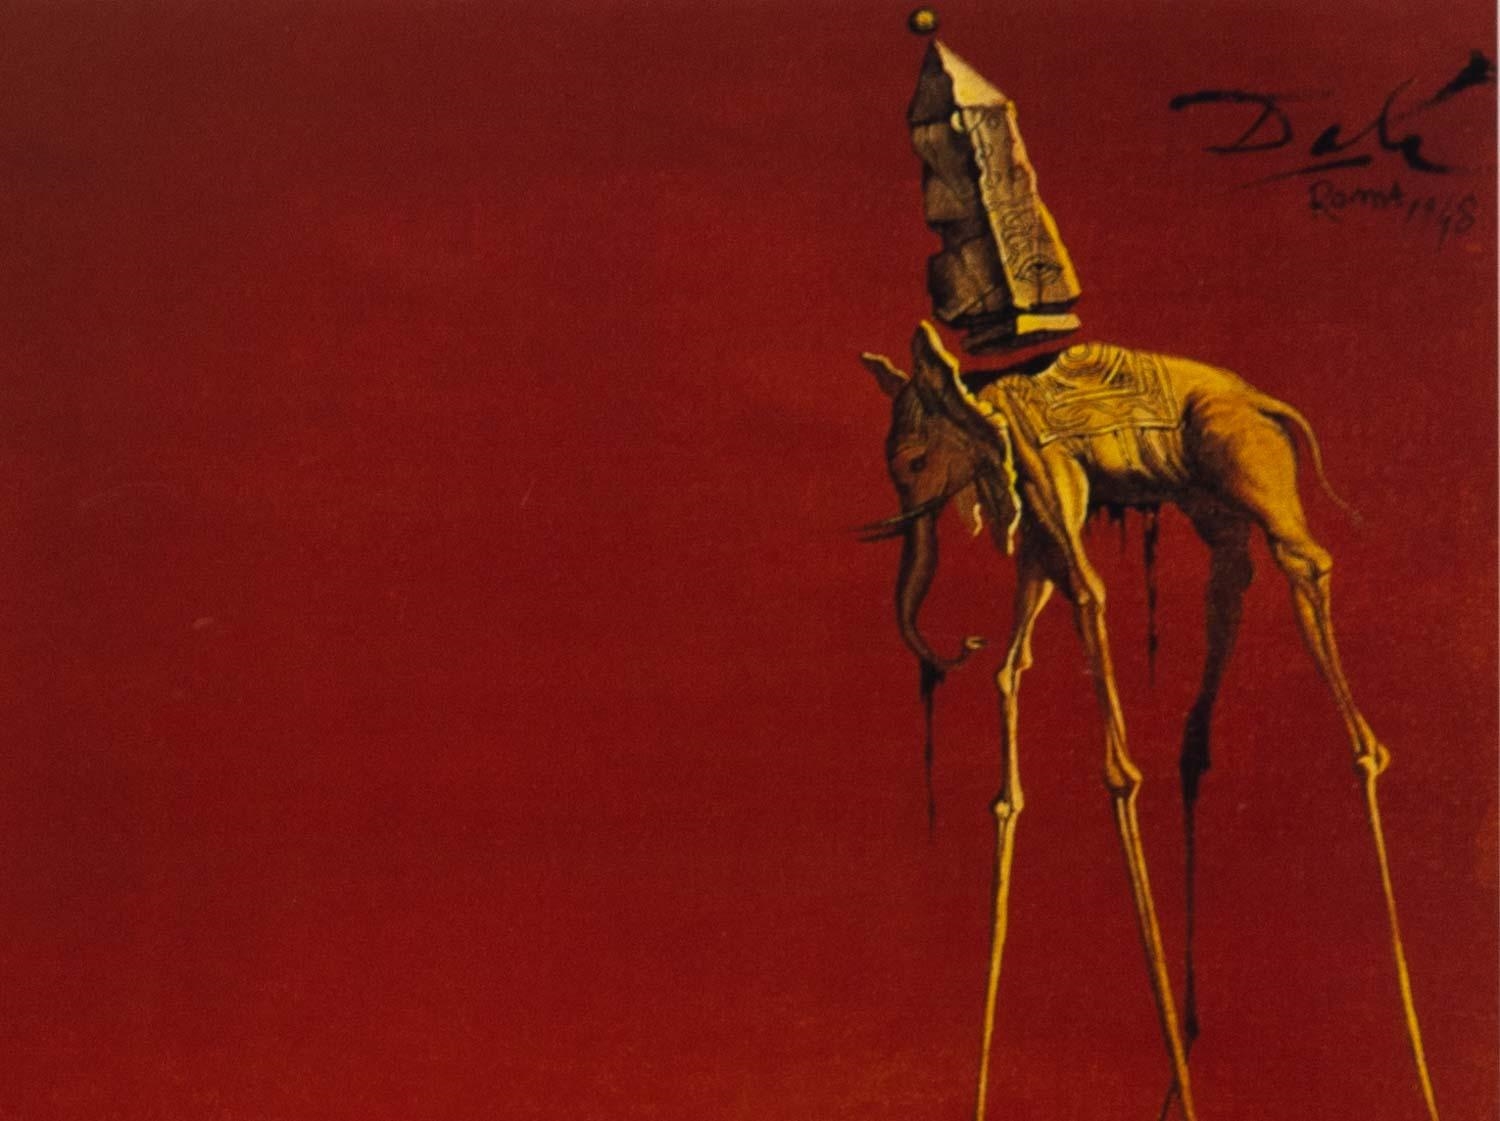 Artwork by Salvador Dalí, The Elephants, Made of Print